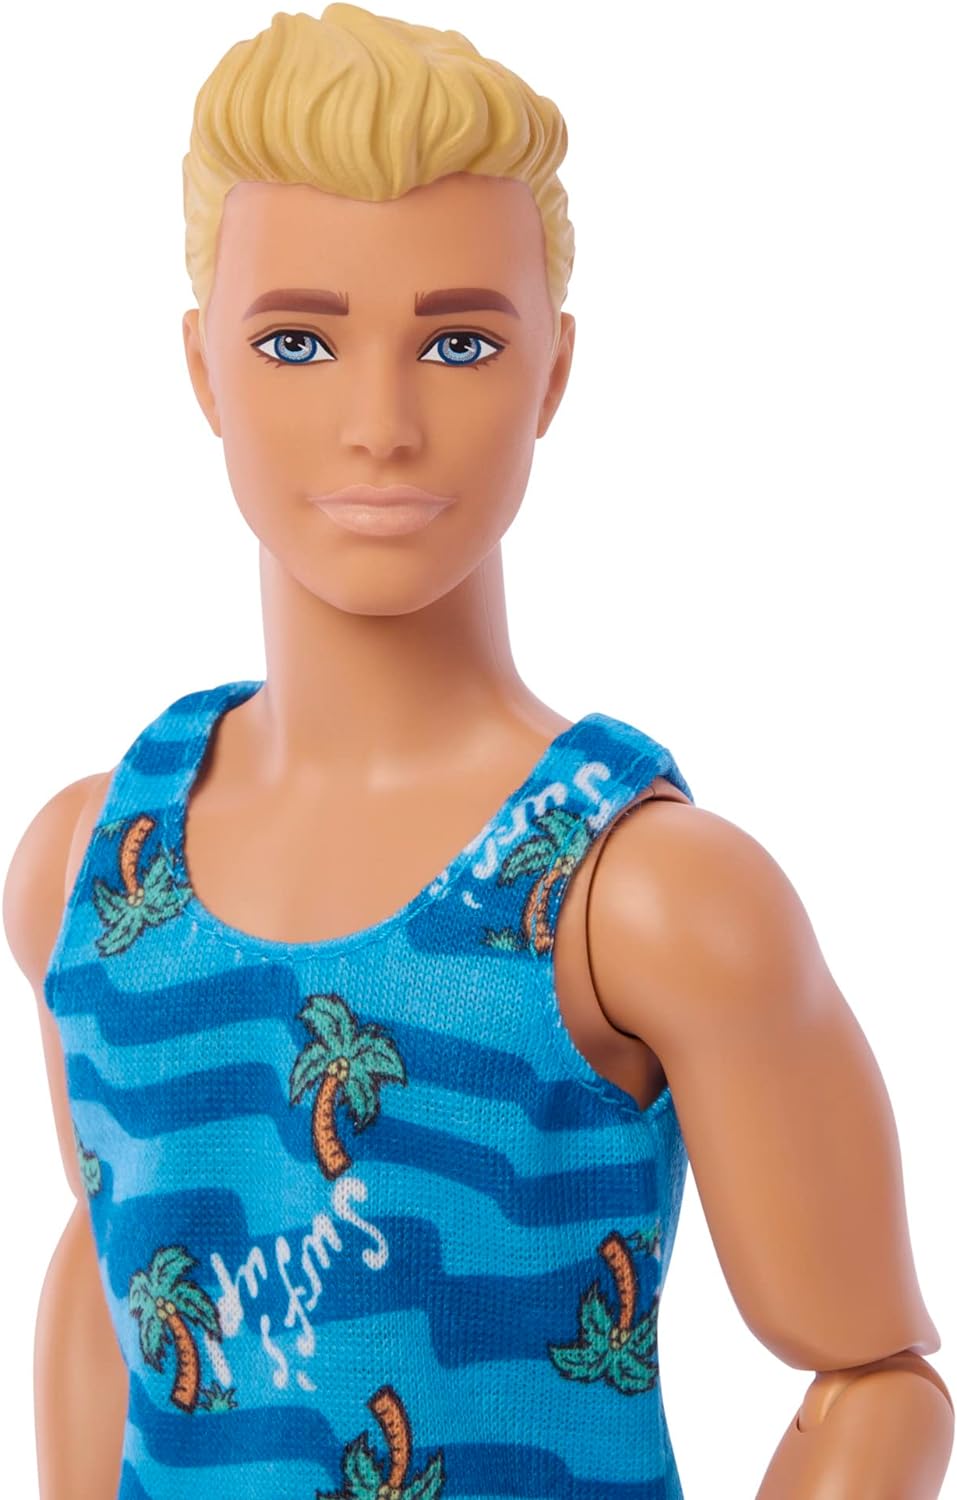 Barbie - Ken Doll With Surfboard HPT50